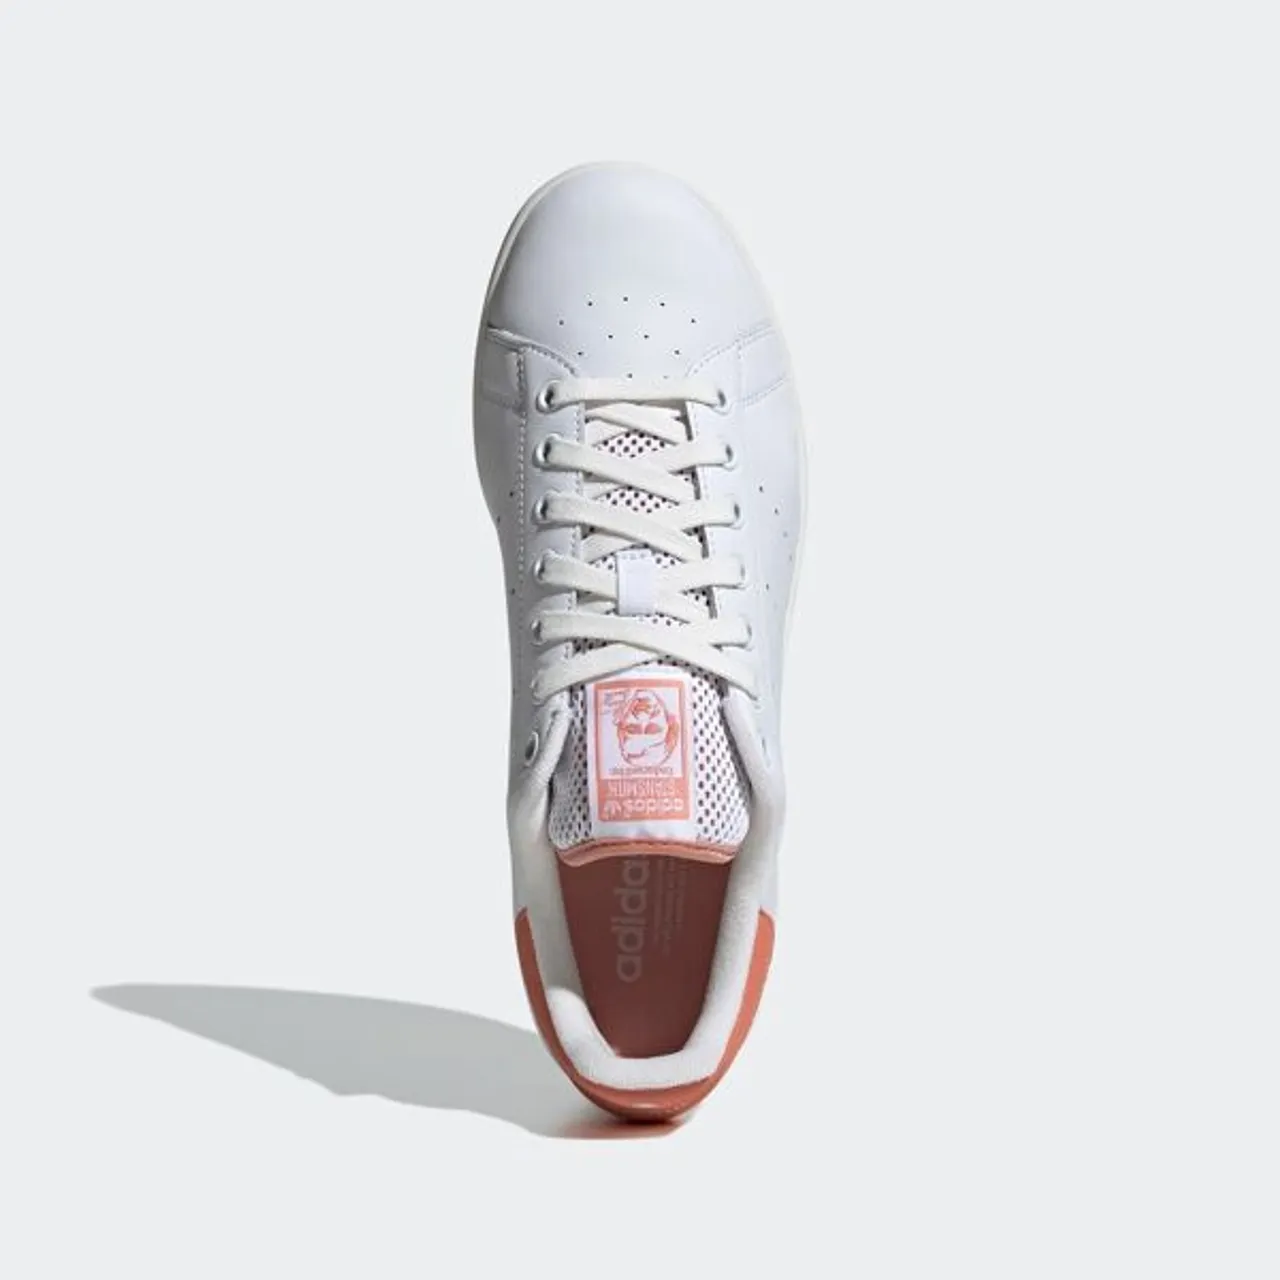 Sneaker ADIDAS ORIGINALS "STAN SMITH" Gr. 40, cloud white, core wonder clay Schuhe Sportschuhe